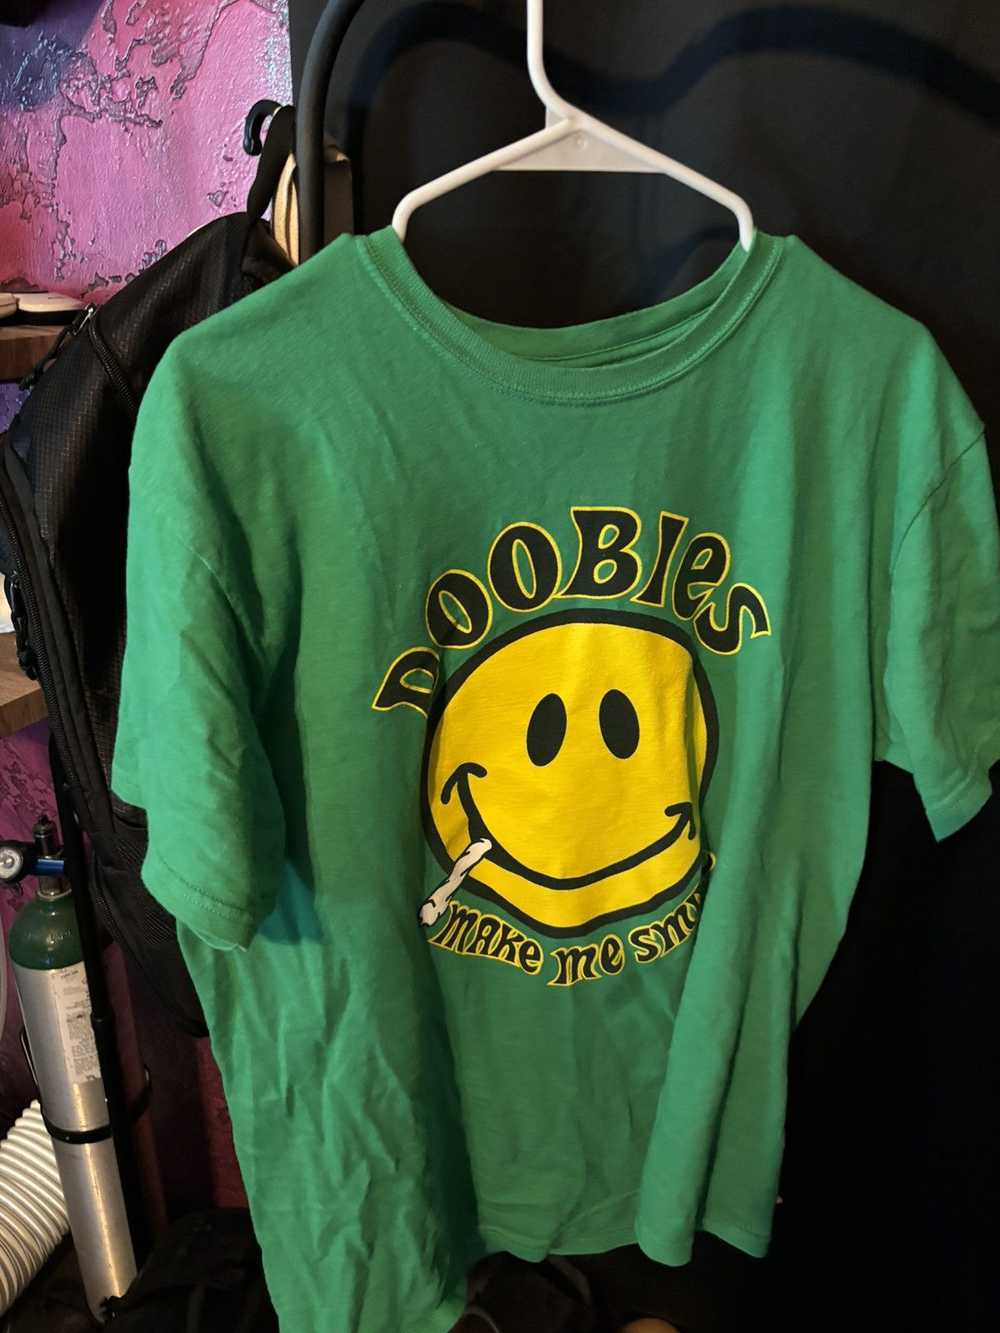 Streetwear “Doobies make me smile” Comedy tee. - image 1